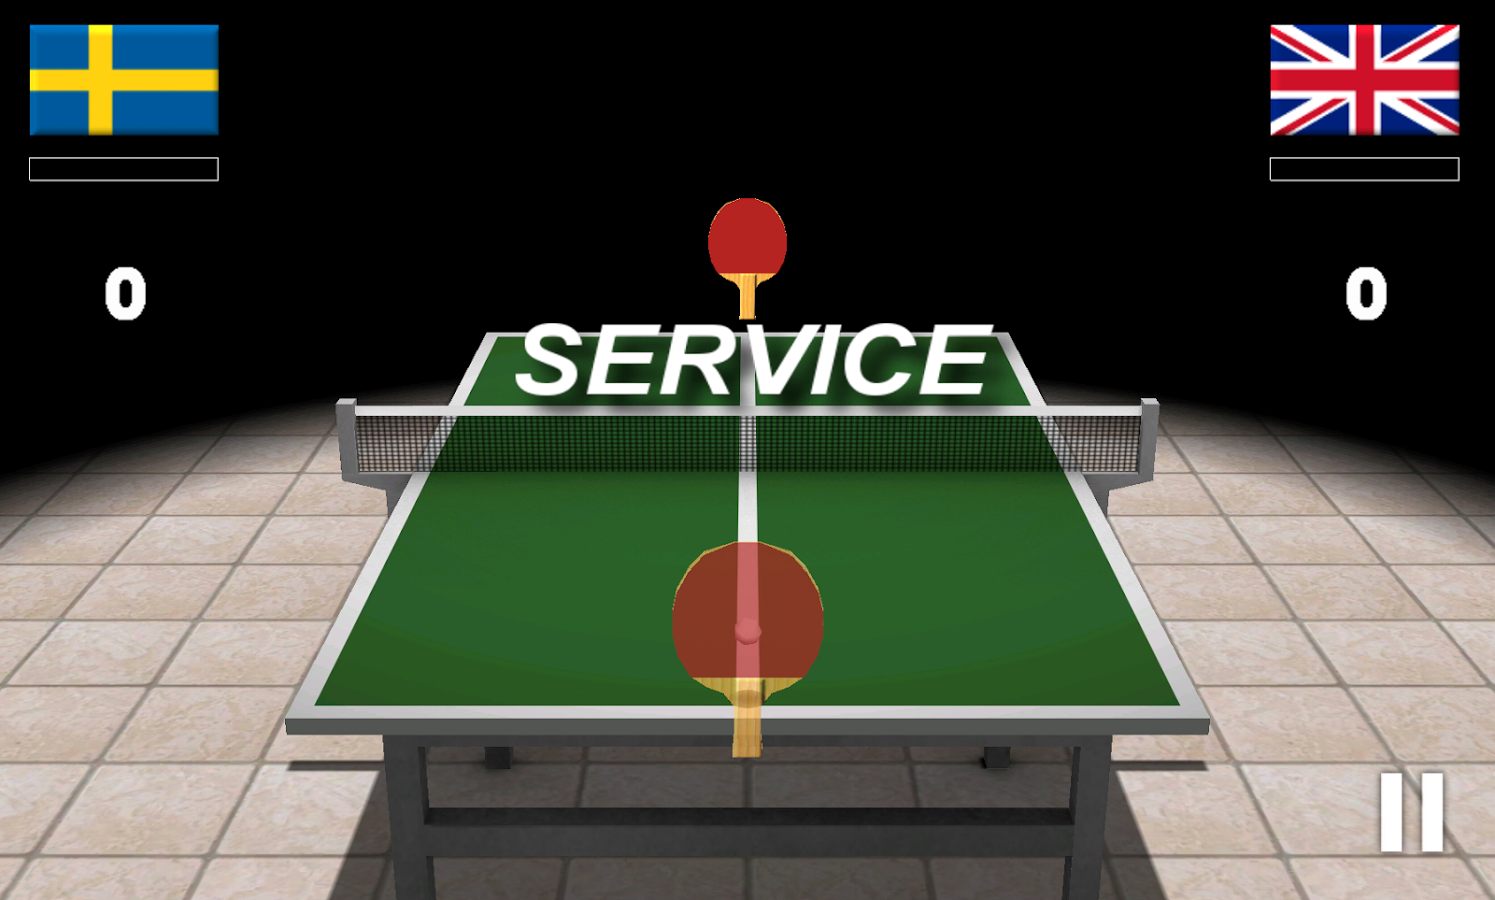 Virtual Table Tennis 3D screenshot